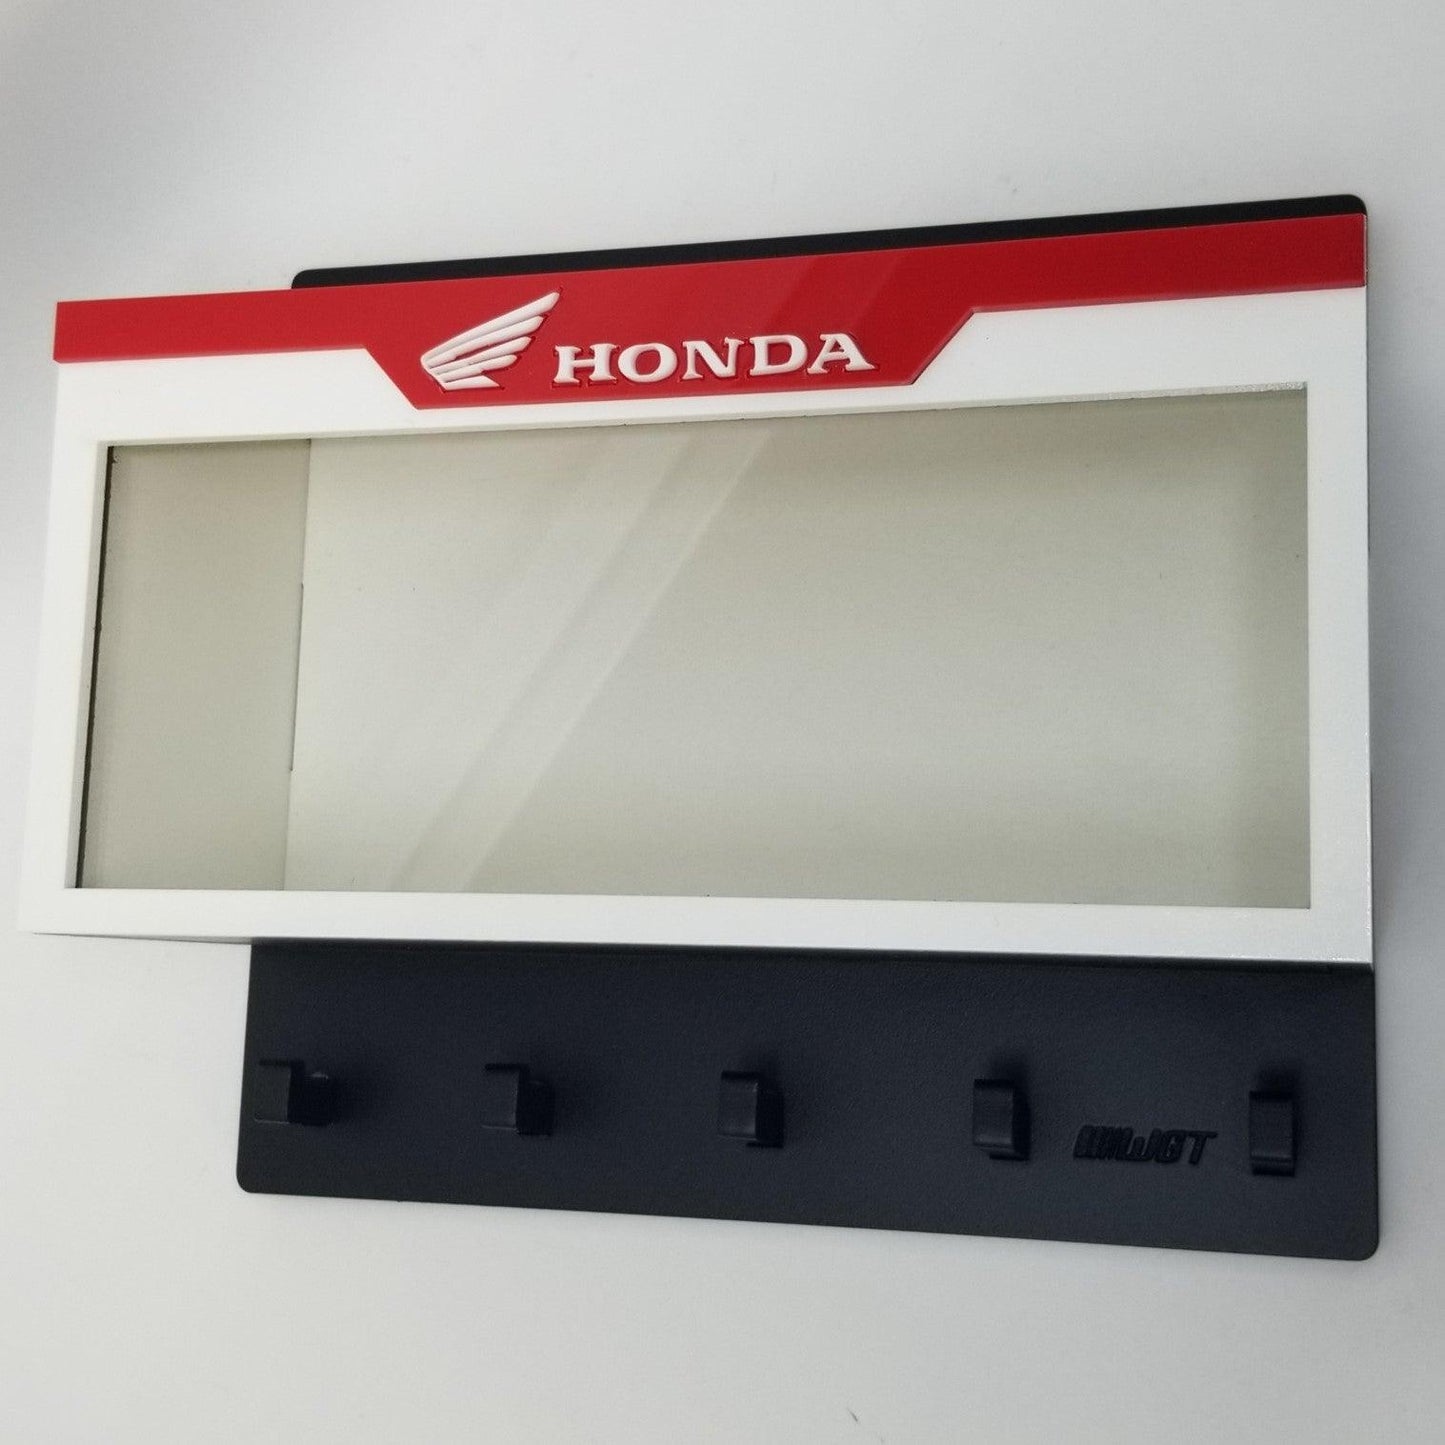 Honda Motorcycles Dealership Wall Key Hook Rack Exclusive Handcrafted Key Holder - Brazilian Shop